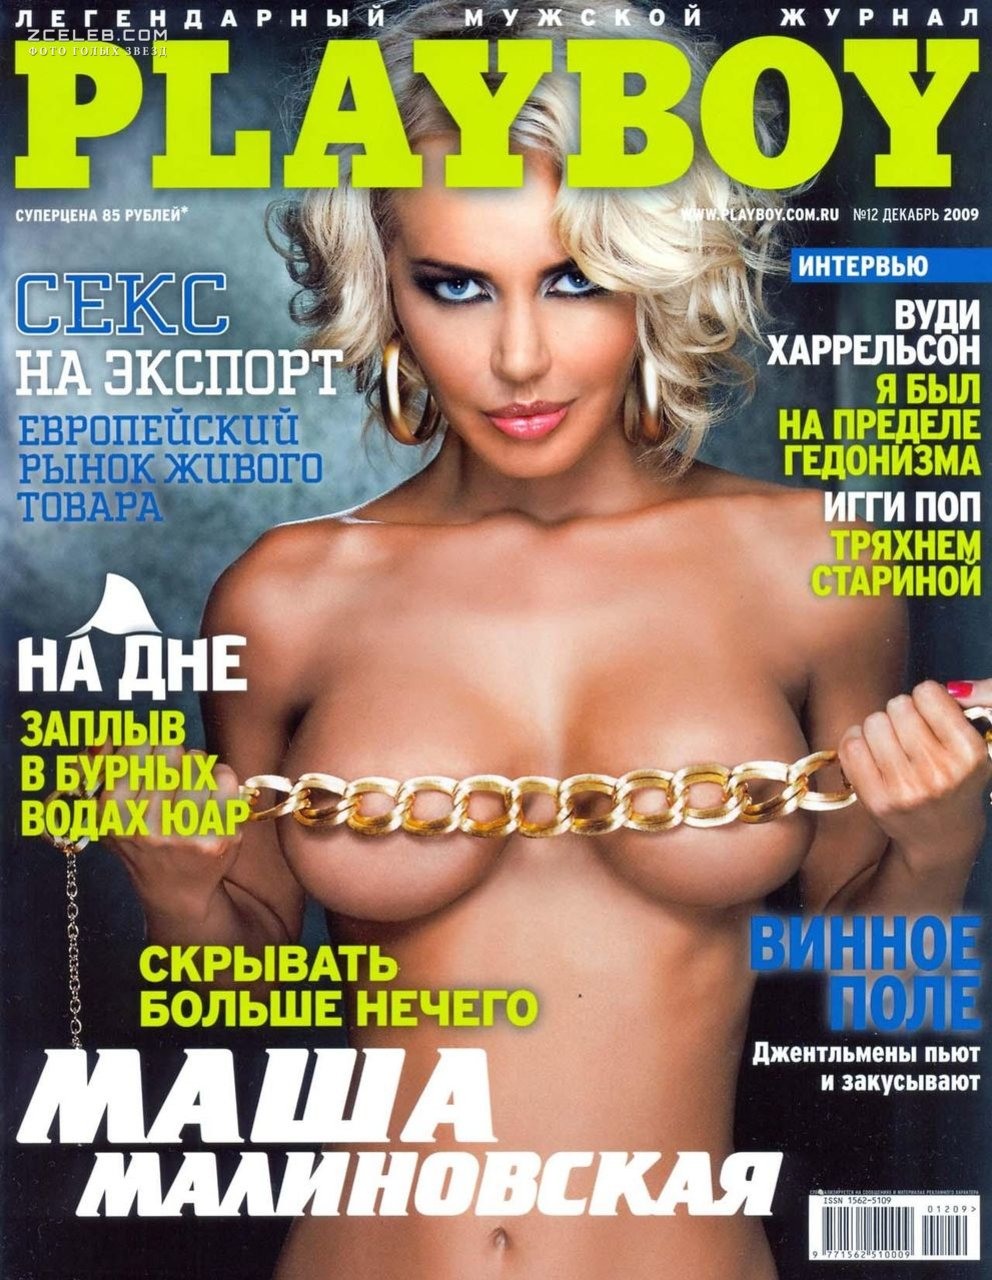 Эротика мужской журнал вк. Порно видео на riosalon.ru